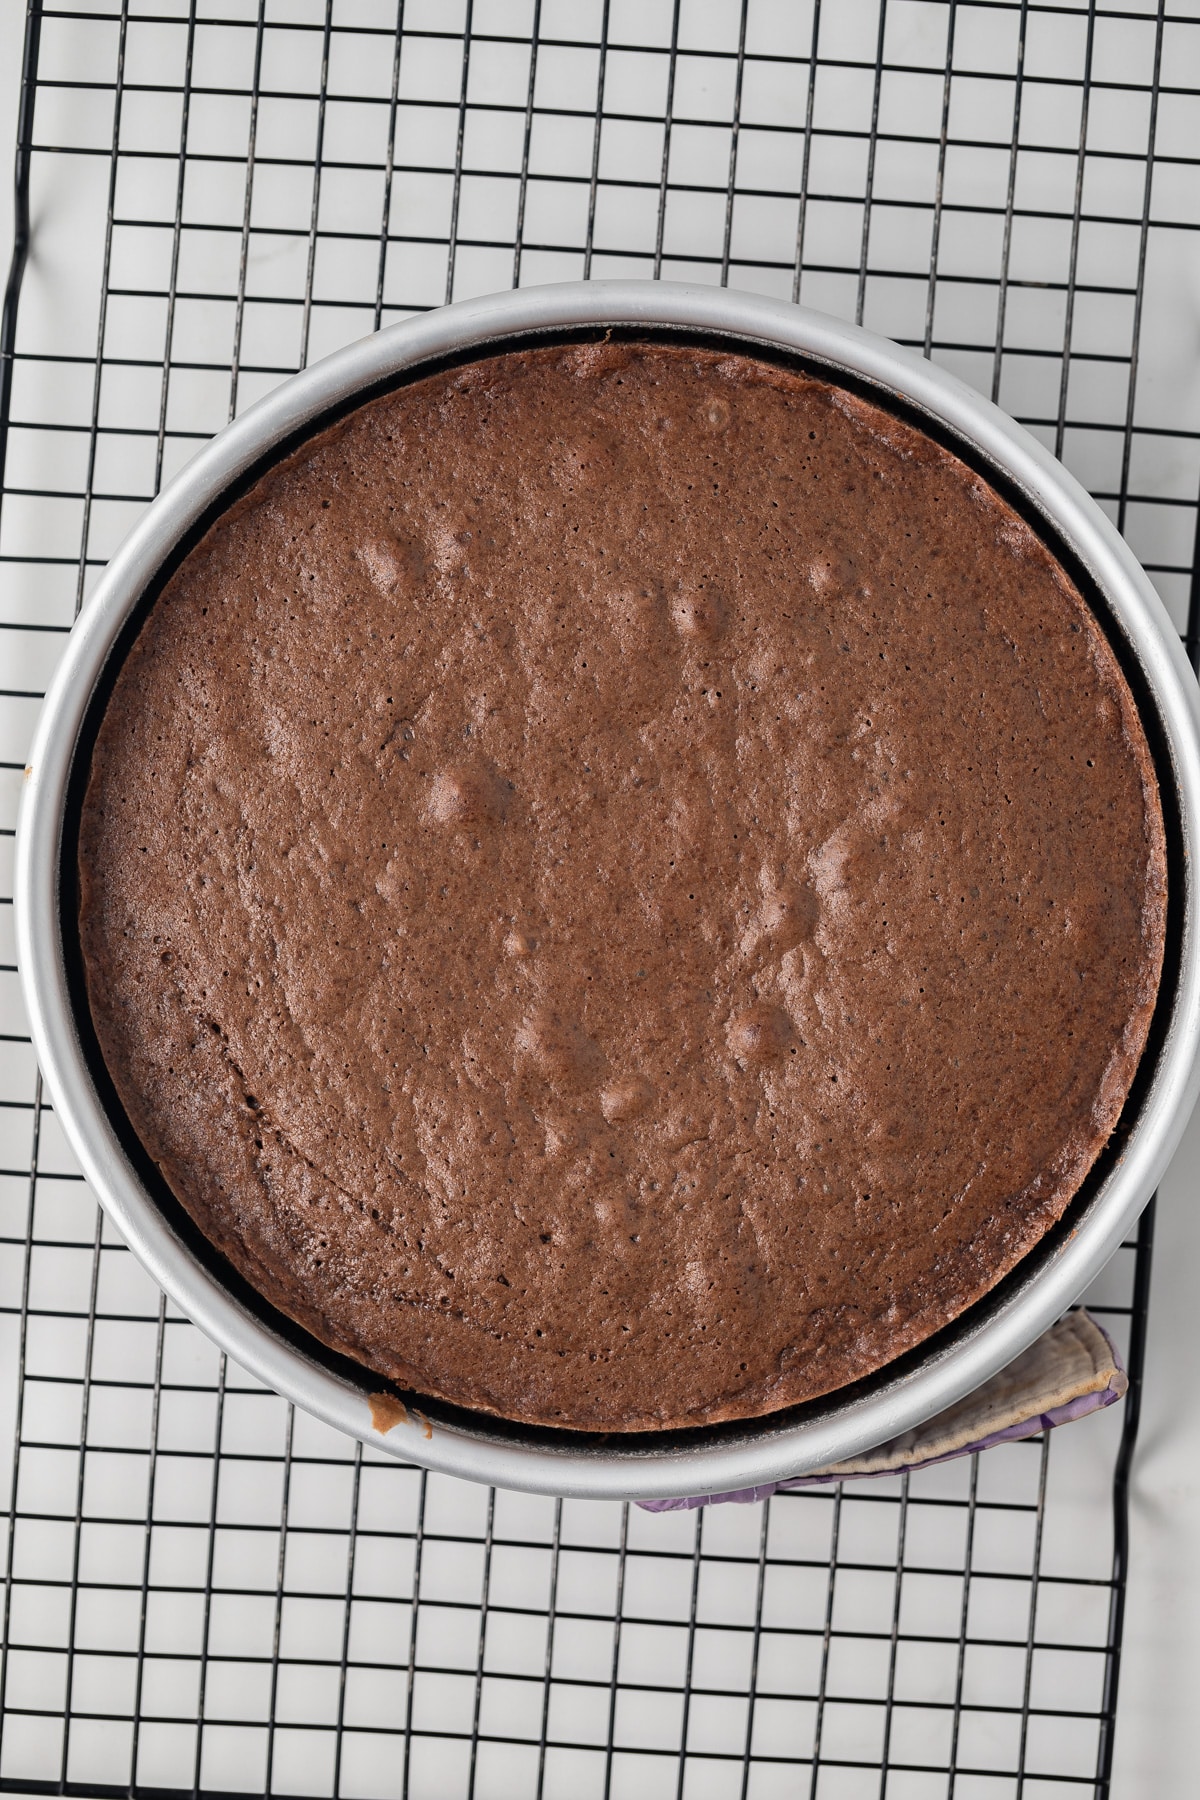 Chocolate cake layer in cake pan.